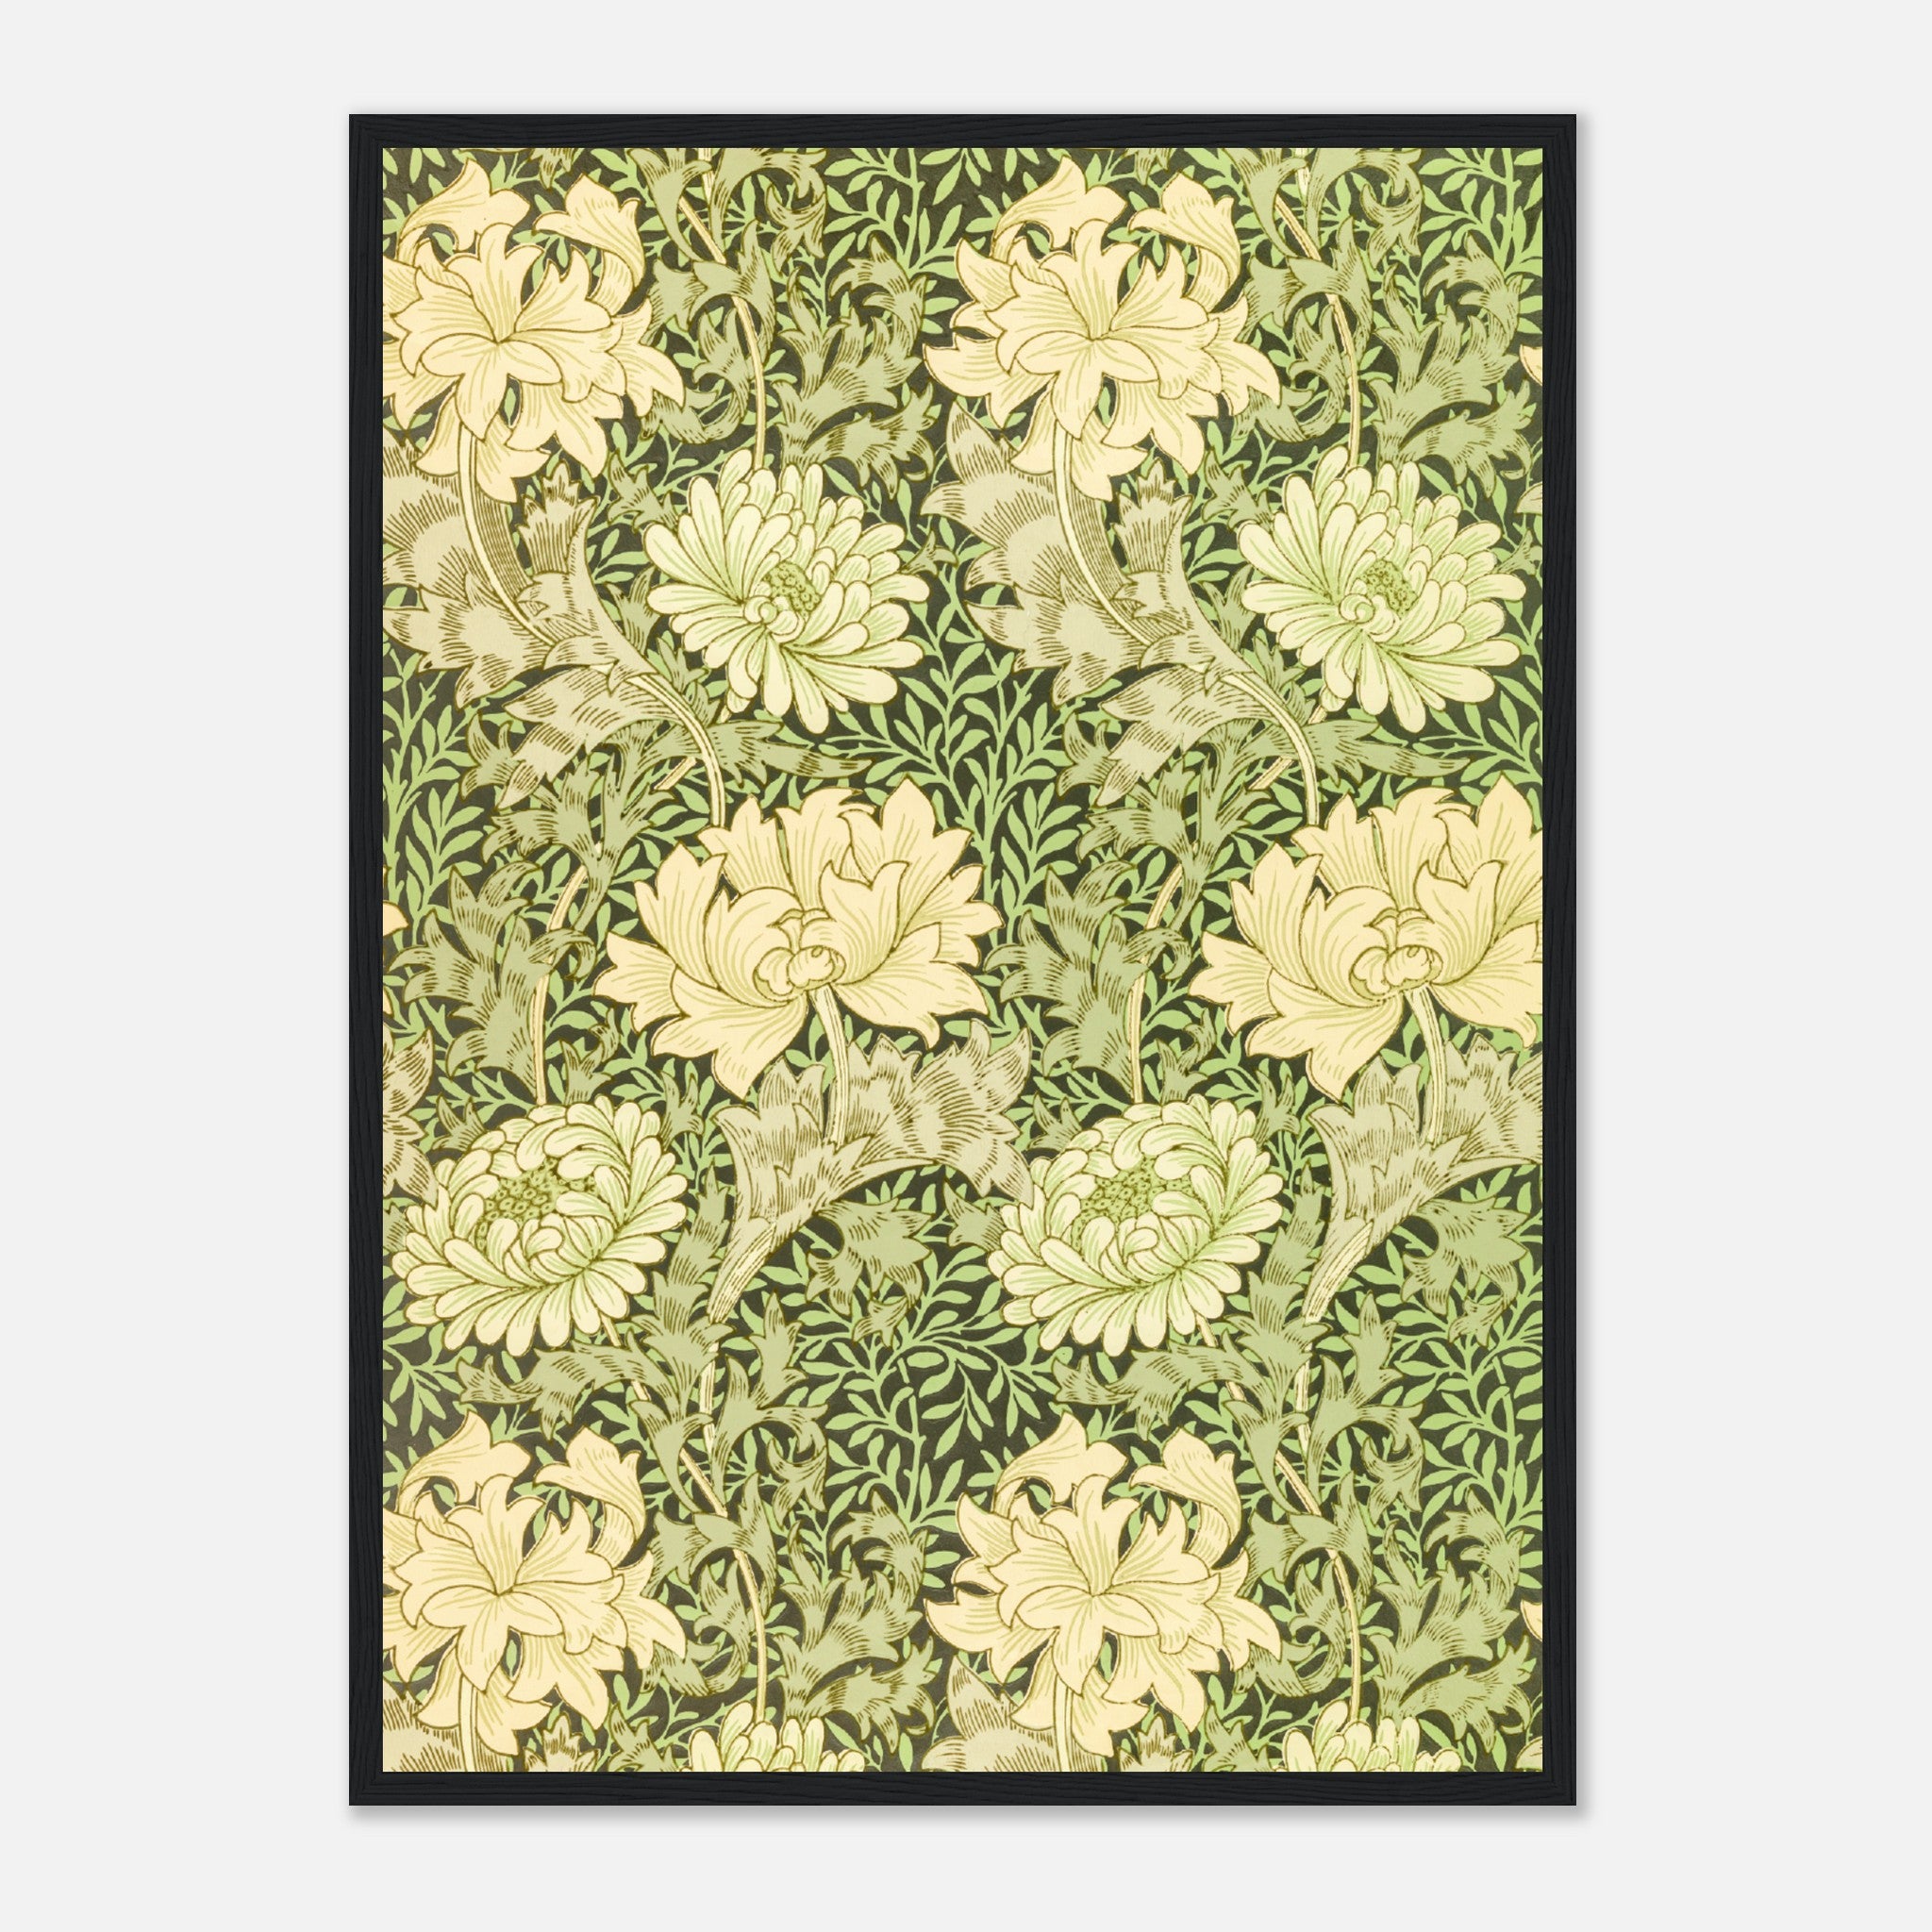 William Morris Chrysanthemum pattern (1877) Poster